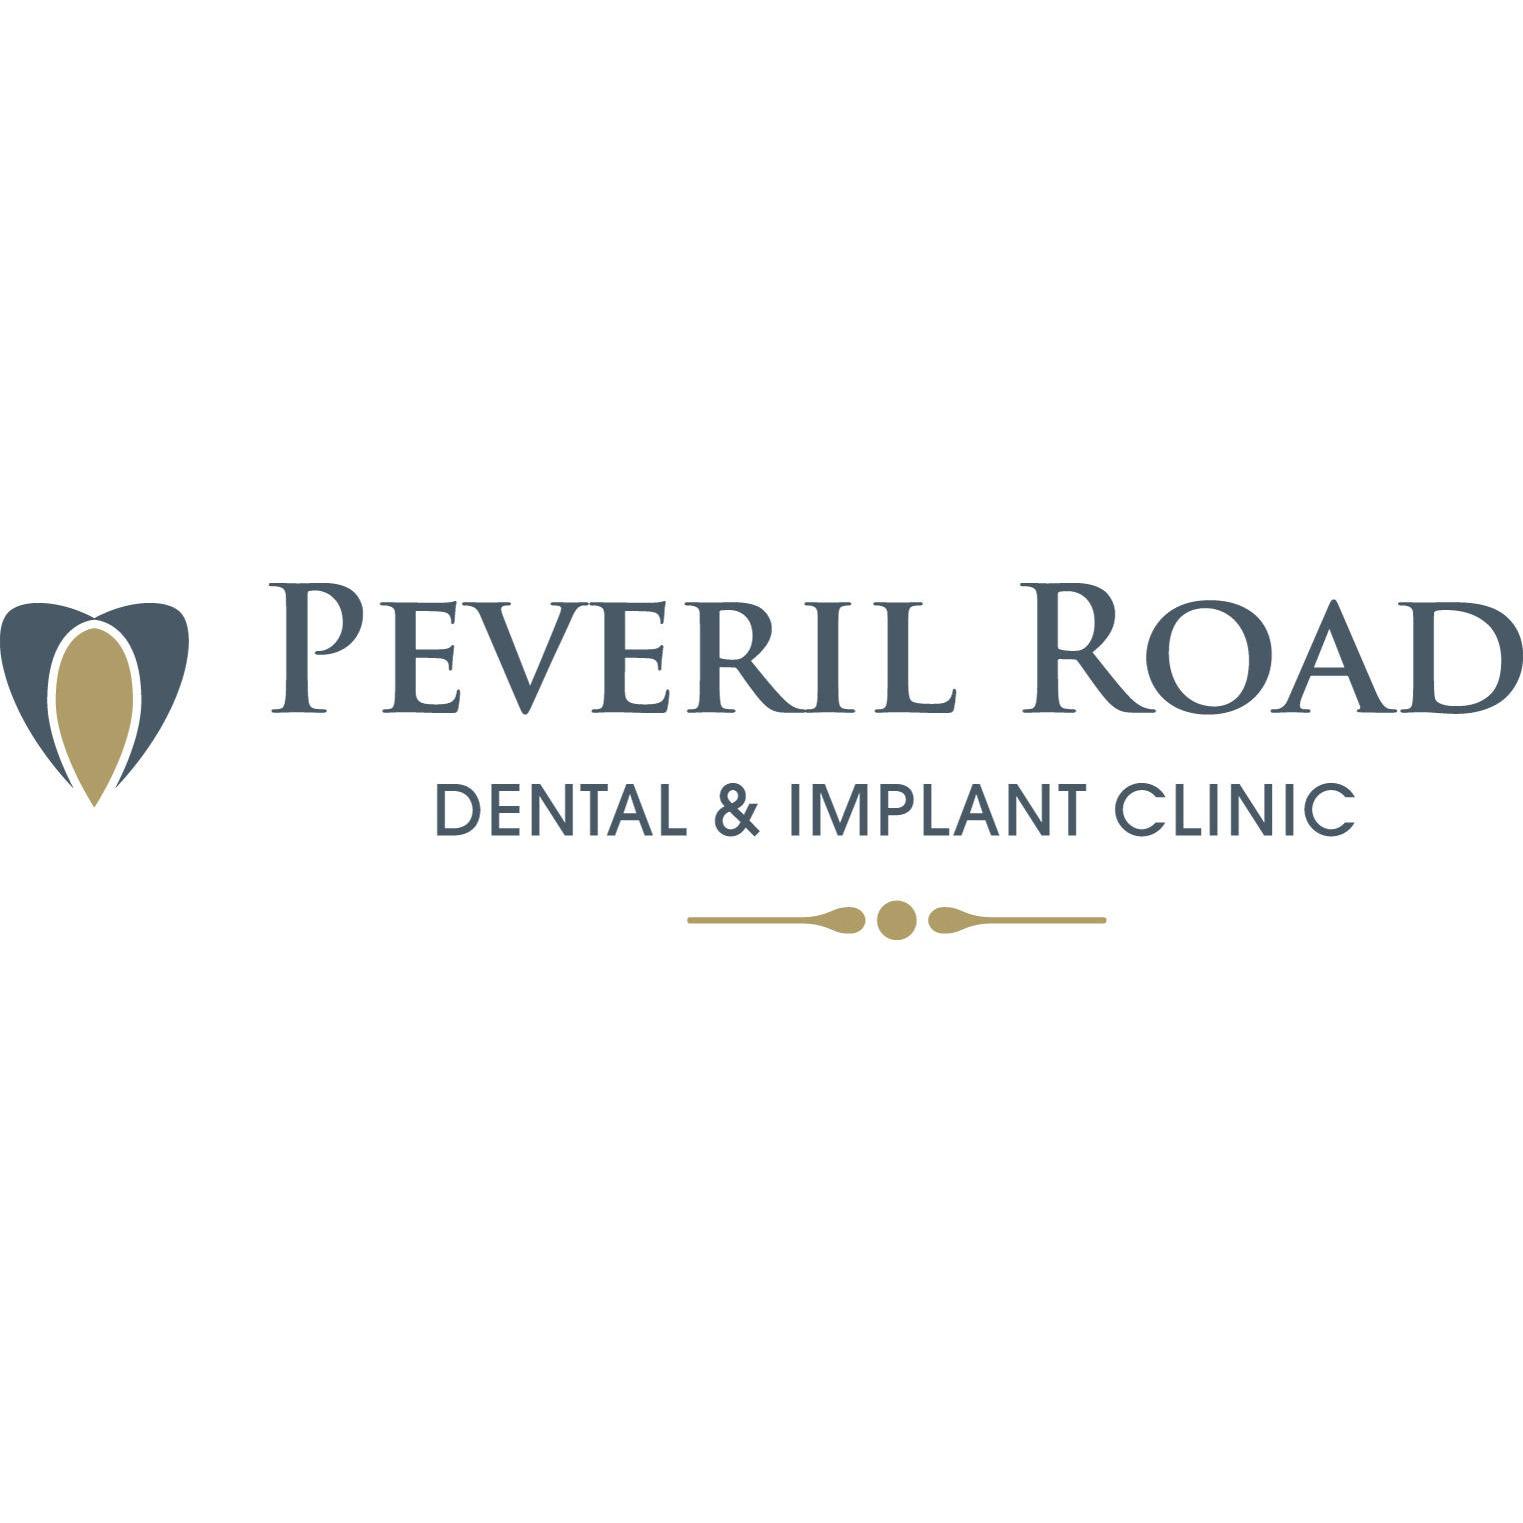 Peveril Road Dental & Implant Clinic practice logo Peveril Road Dental & Implant Clinic Nottingham 01157 590129